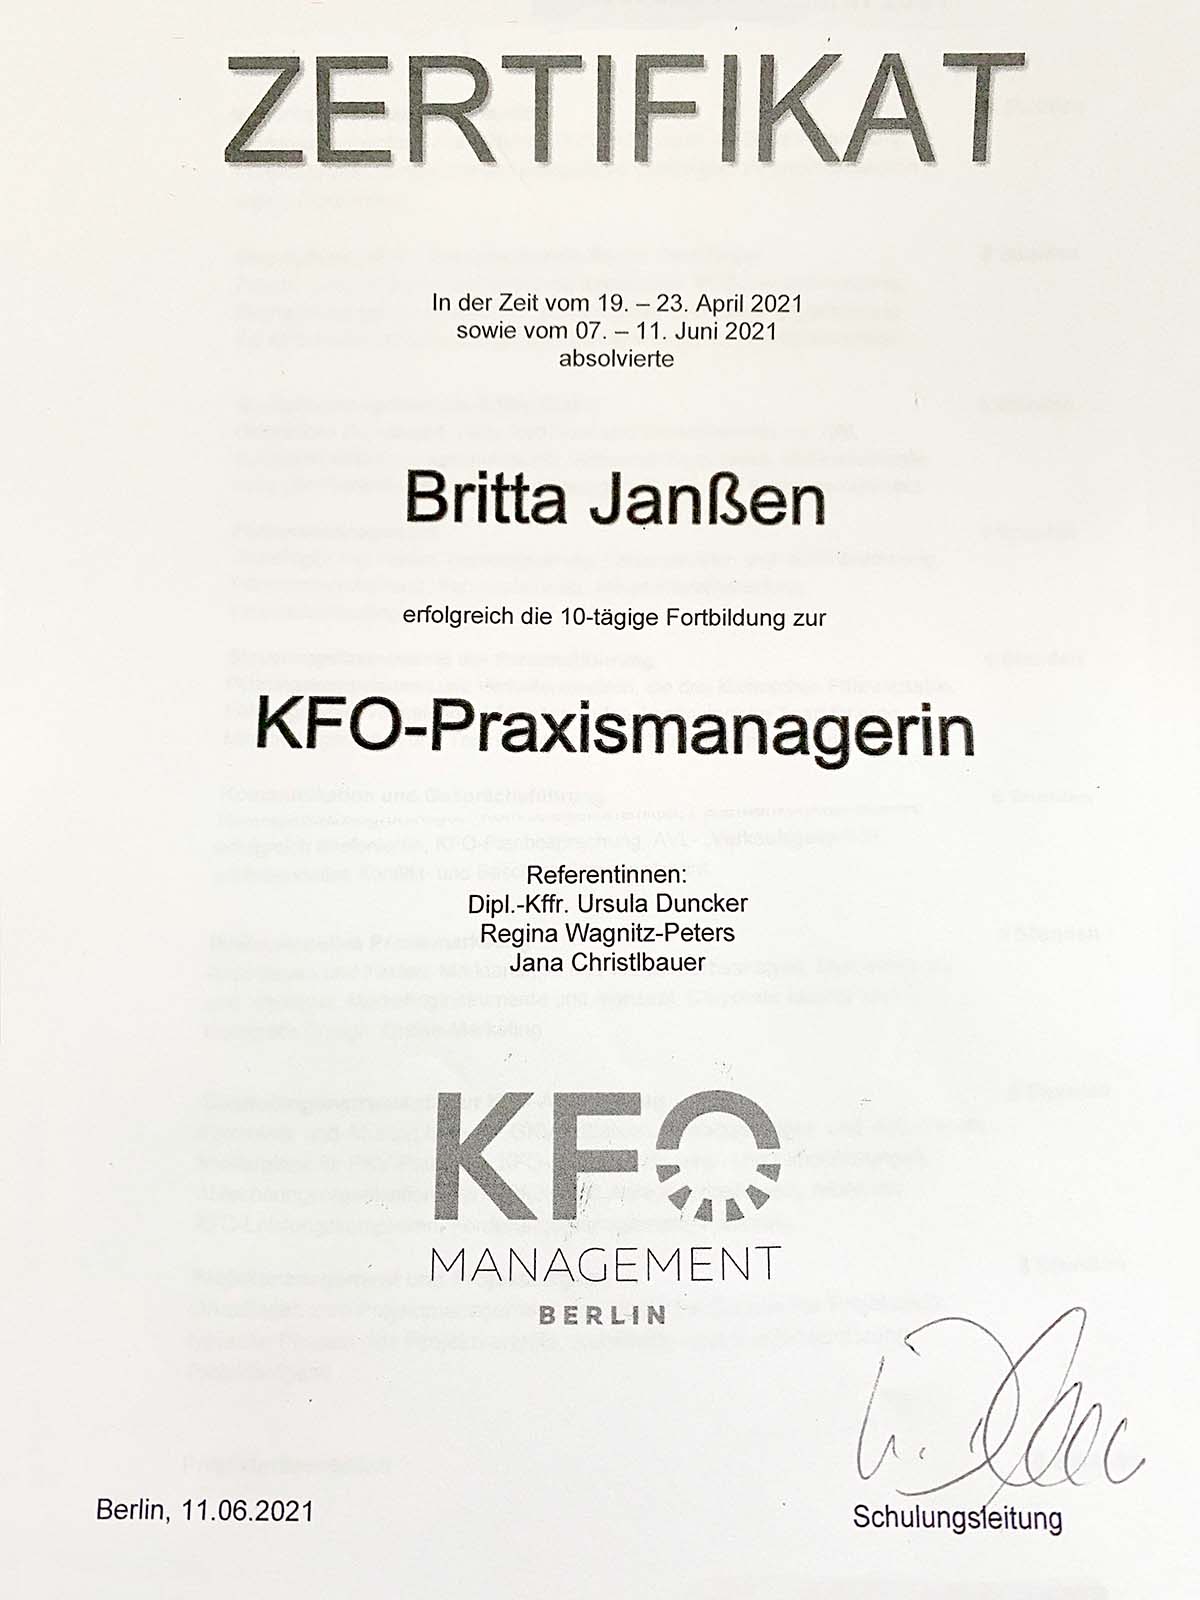 zertifikat kfo praxismanagerin